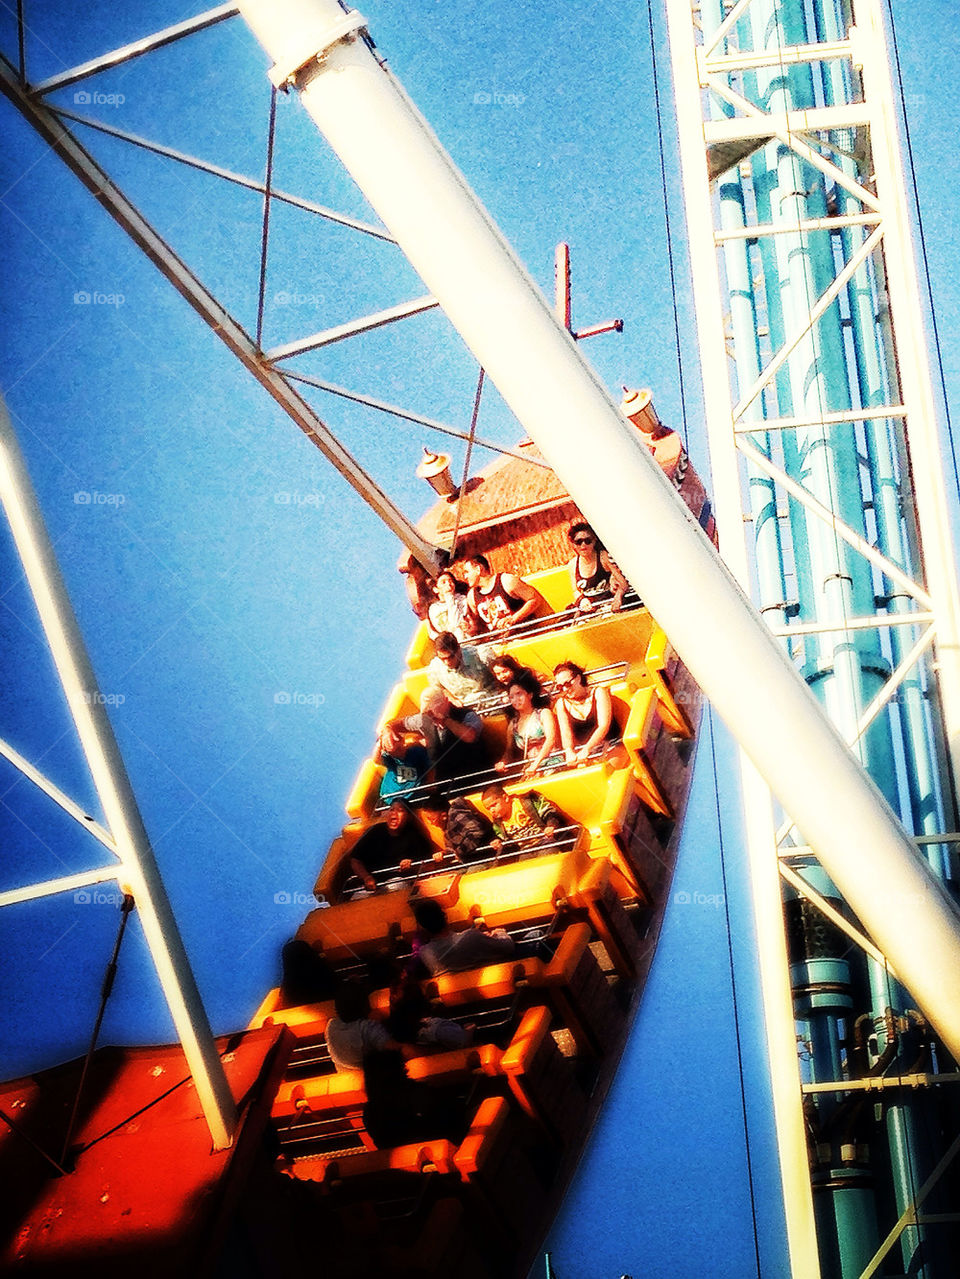 Swinging ship ride at an amusement park